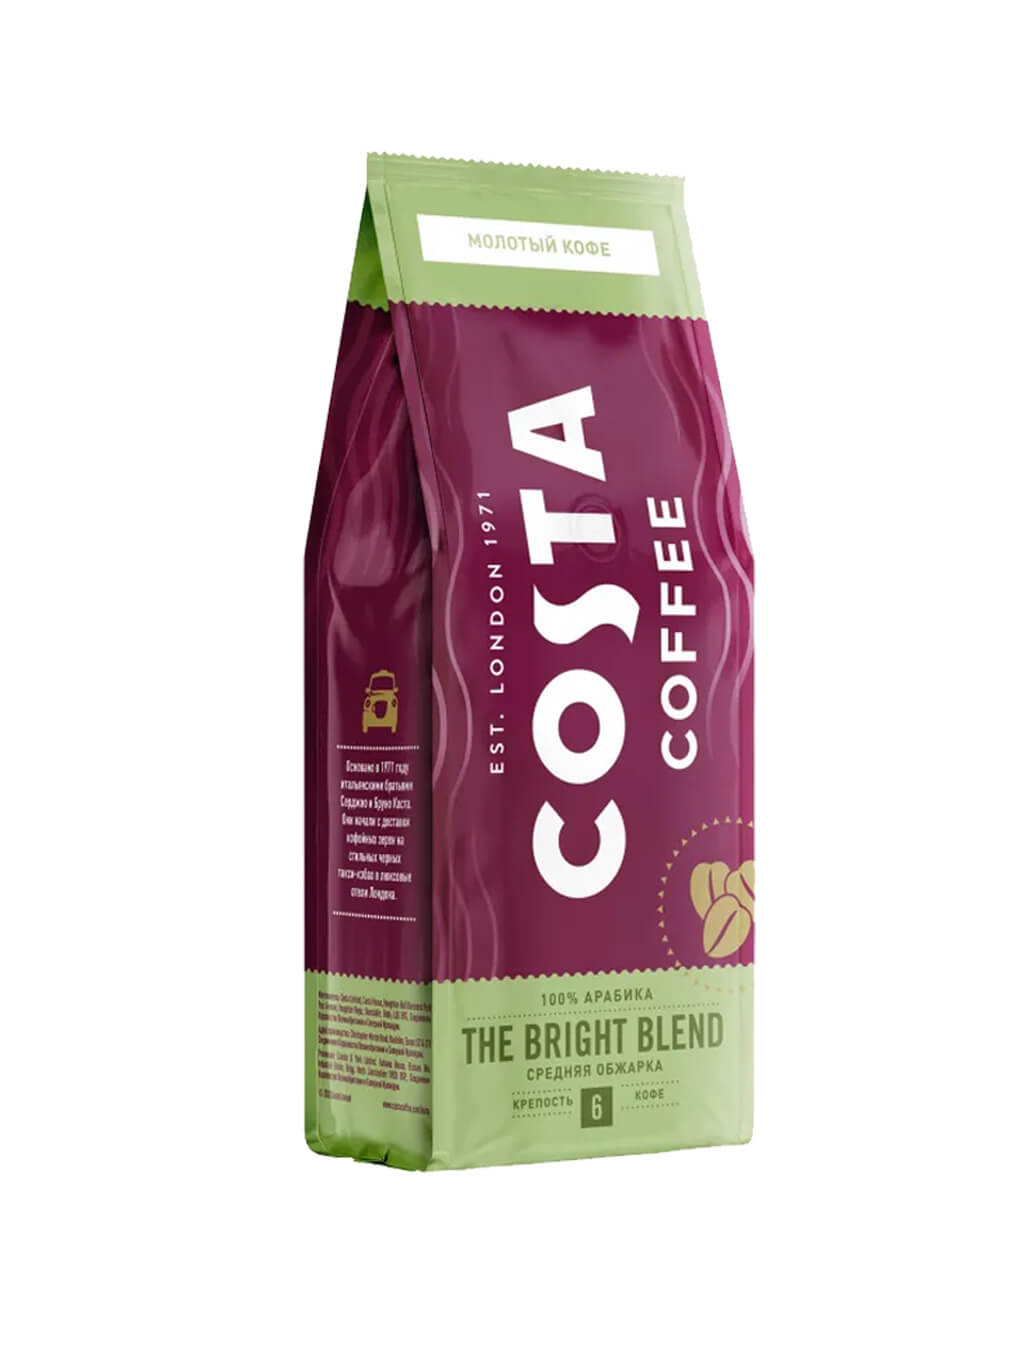 Молотый кофе 200г. Costa Coffee Bright Blend 200. Кофе Коста Брайт Бленд молотый, 200 г. 200г кофе Costa Coffee Colombian мол. Коста кофе Signature Blend.